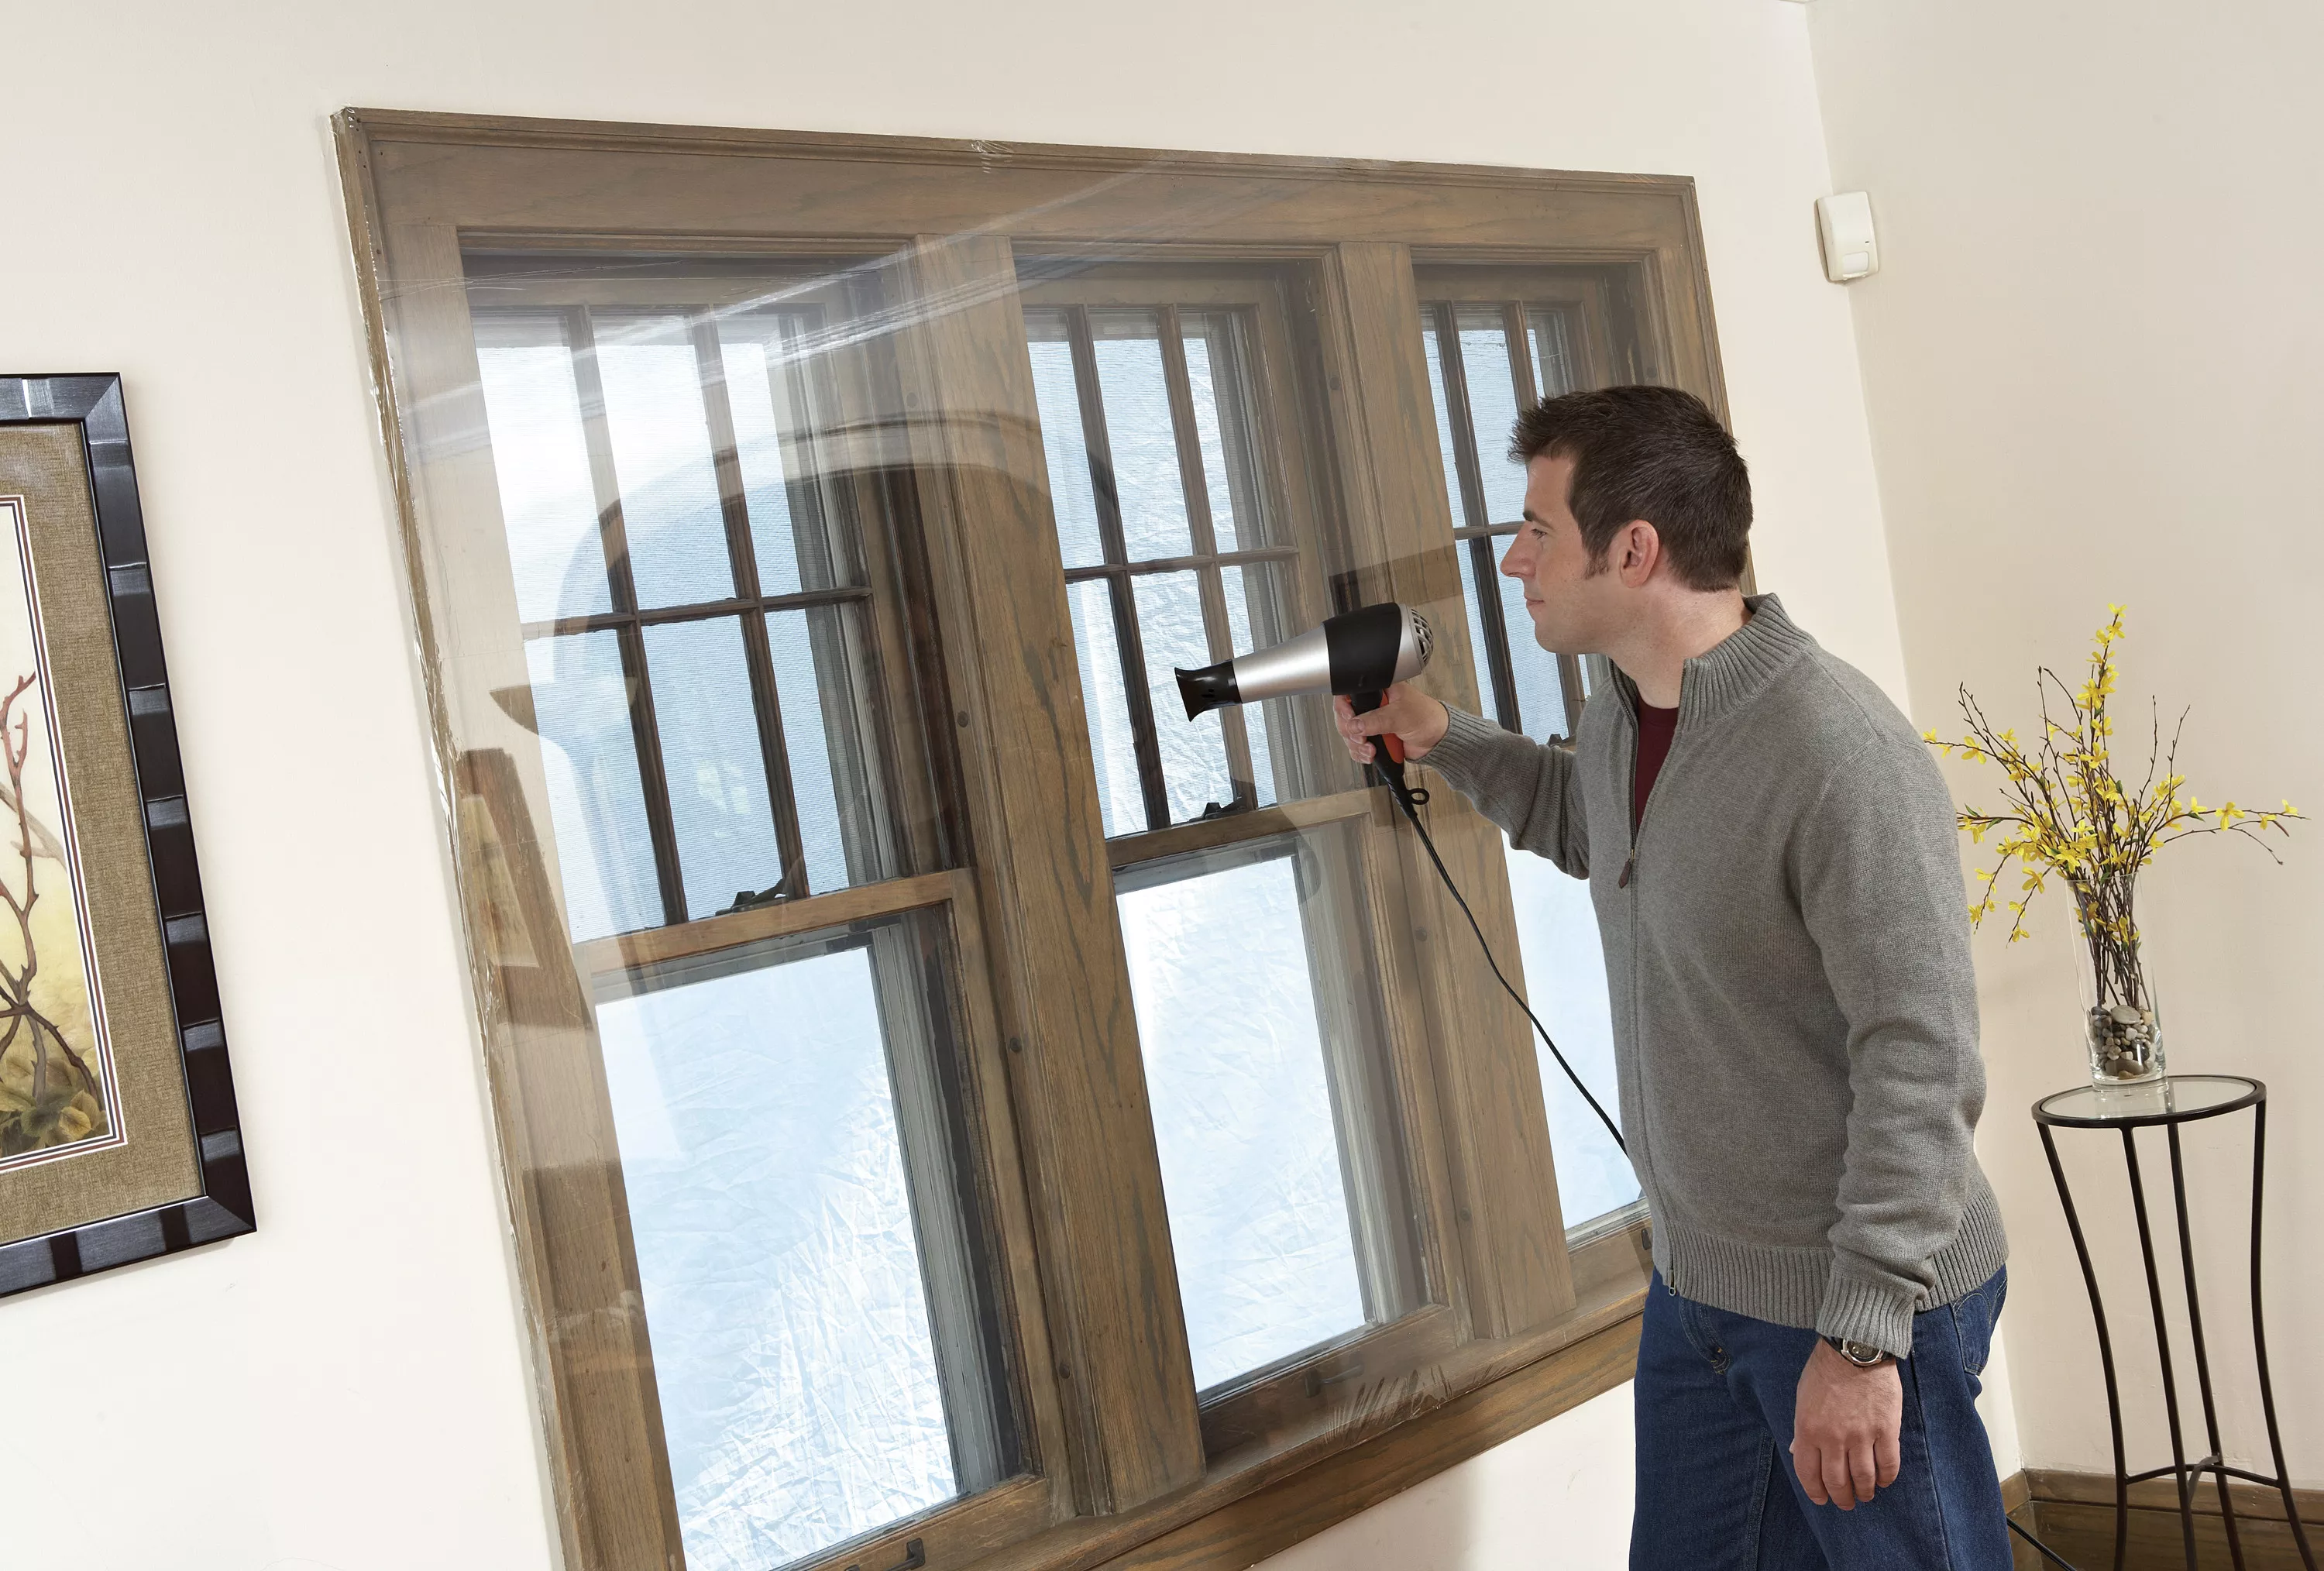 SKU 7100075770 | 3M™ Indoor Window Insulator Kit - Oversized Window